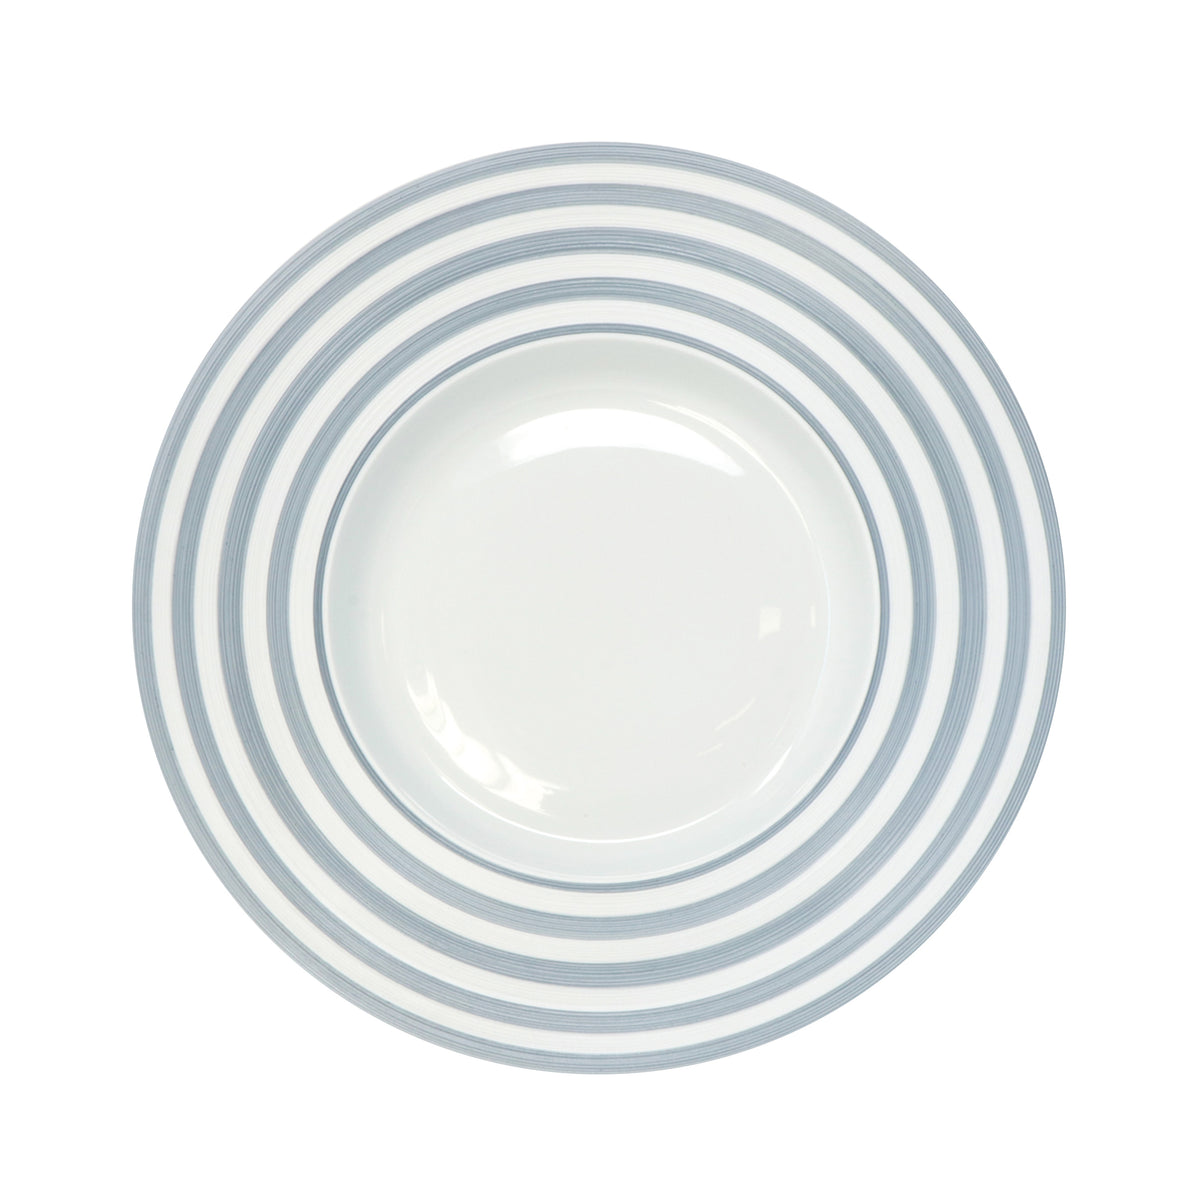 HEMISPHERE Storm Blue Striped - Rim soup plate, large